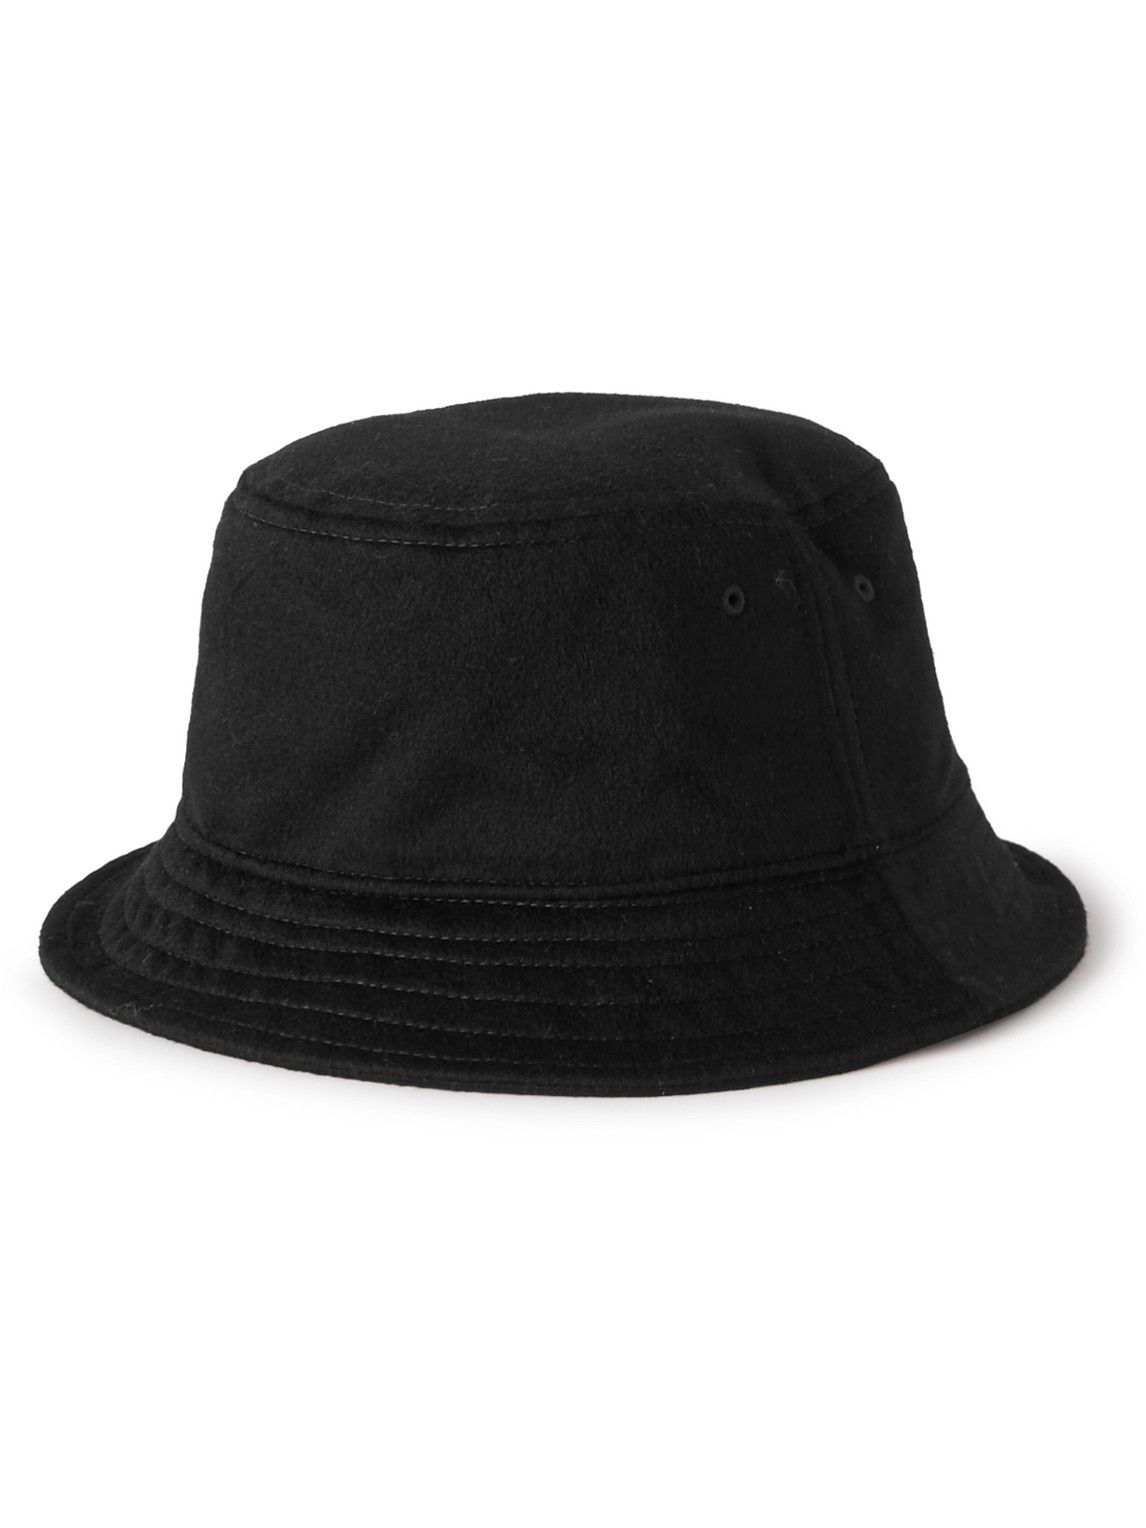 SSAM - Romeo Cashmere Bucket Hat - Black SSAM